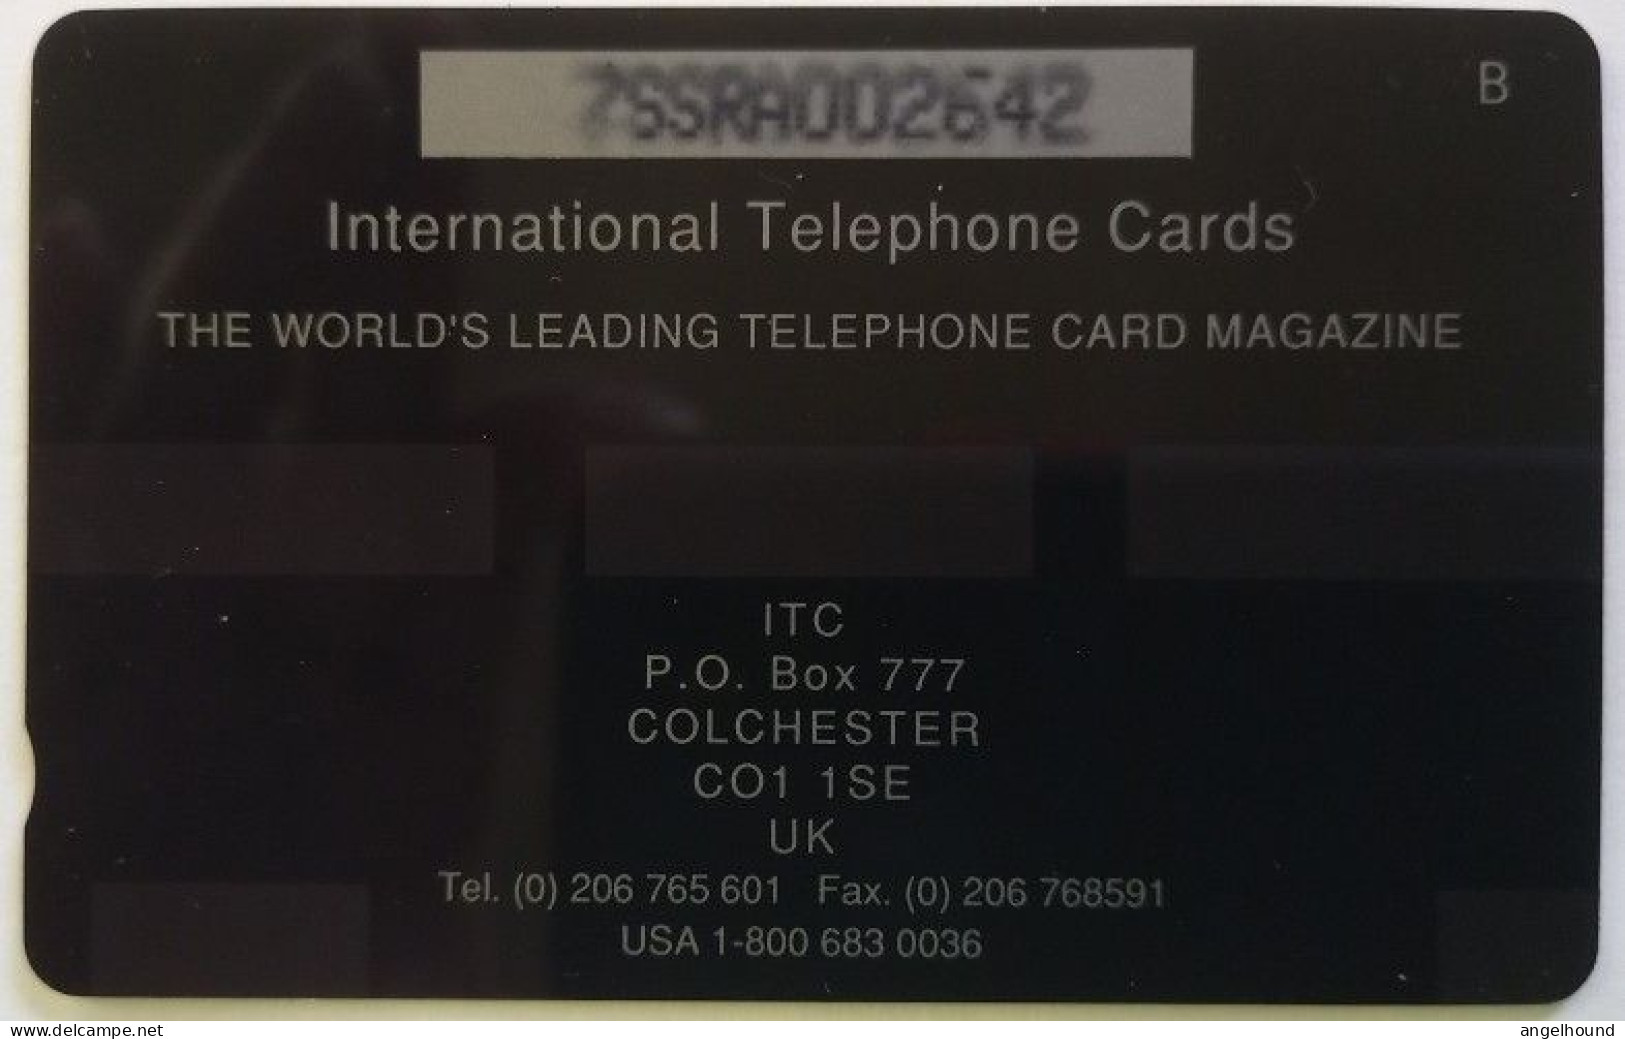 Russia Comstar $12 MINT GPT 7SSRA - International Telephone Cards Magazine - Russia